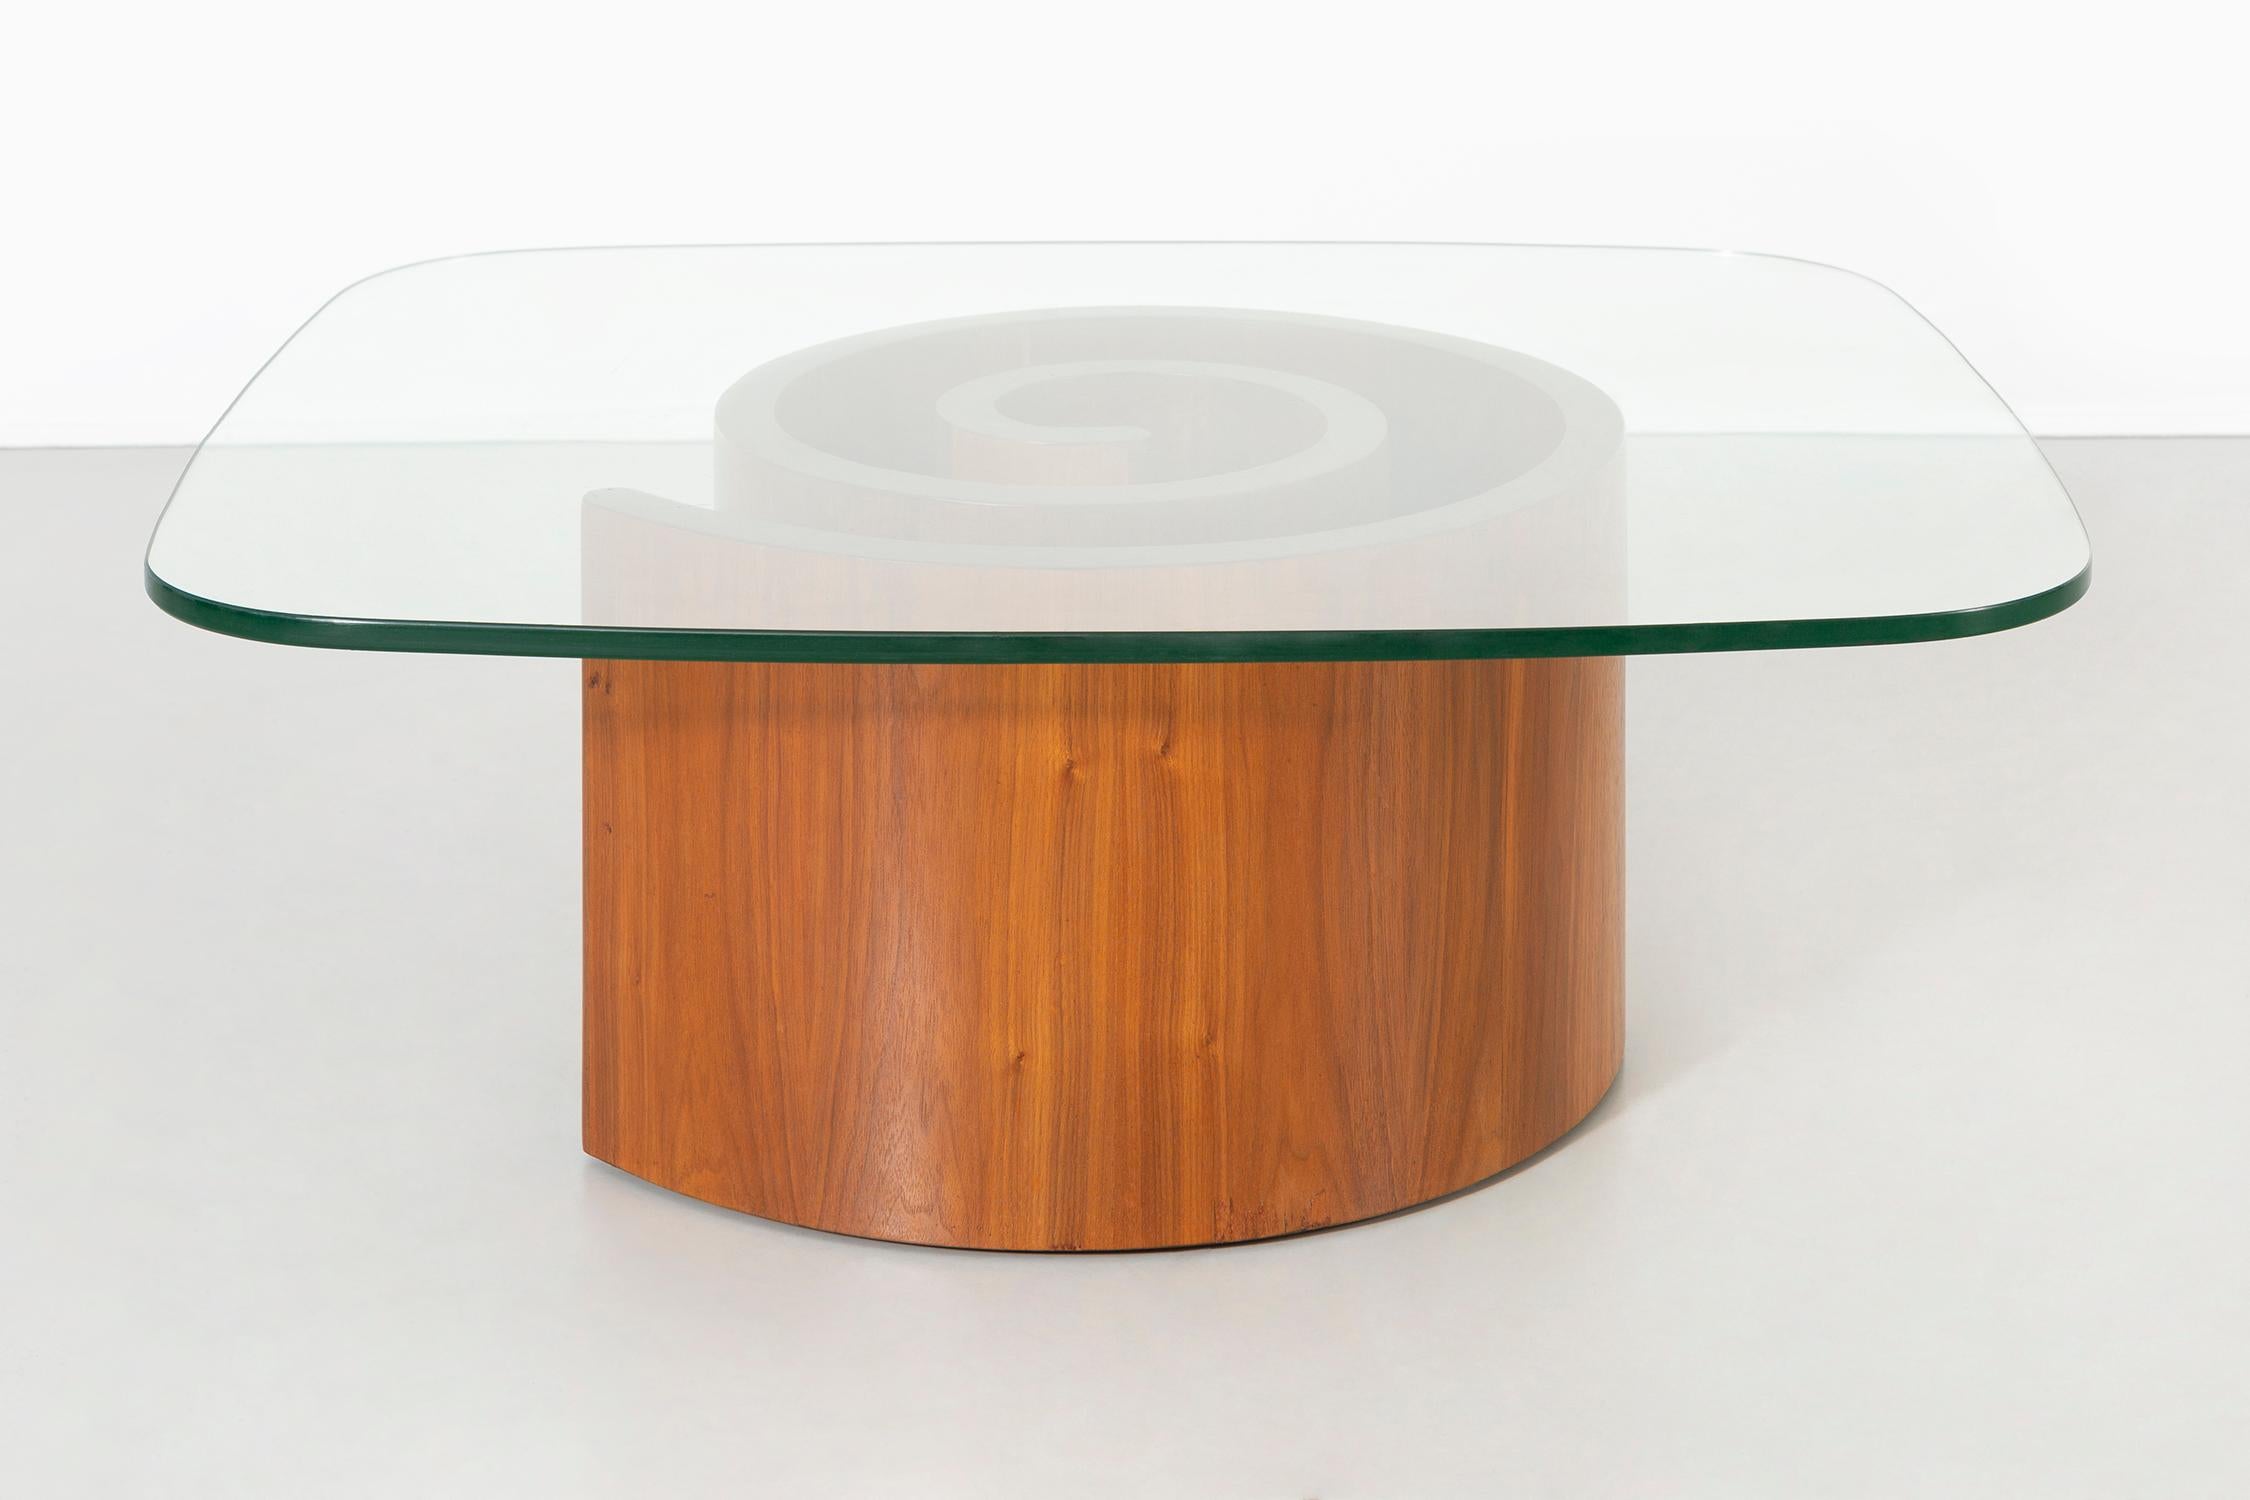 Snail coffee table

designed by Vladimir Kagan for Selig

USA, circa 1950s

walnut + glass

14 5/8